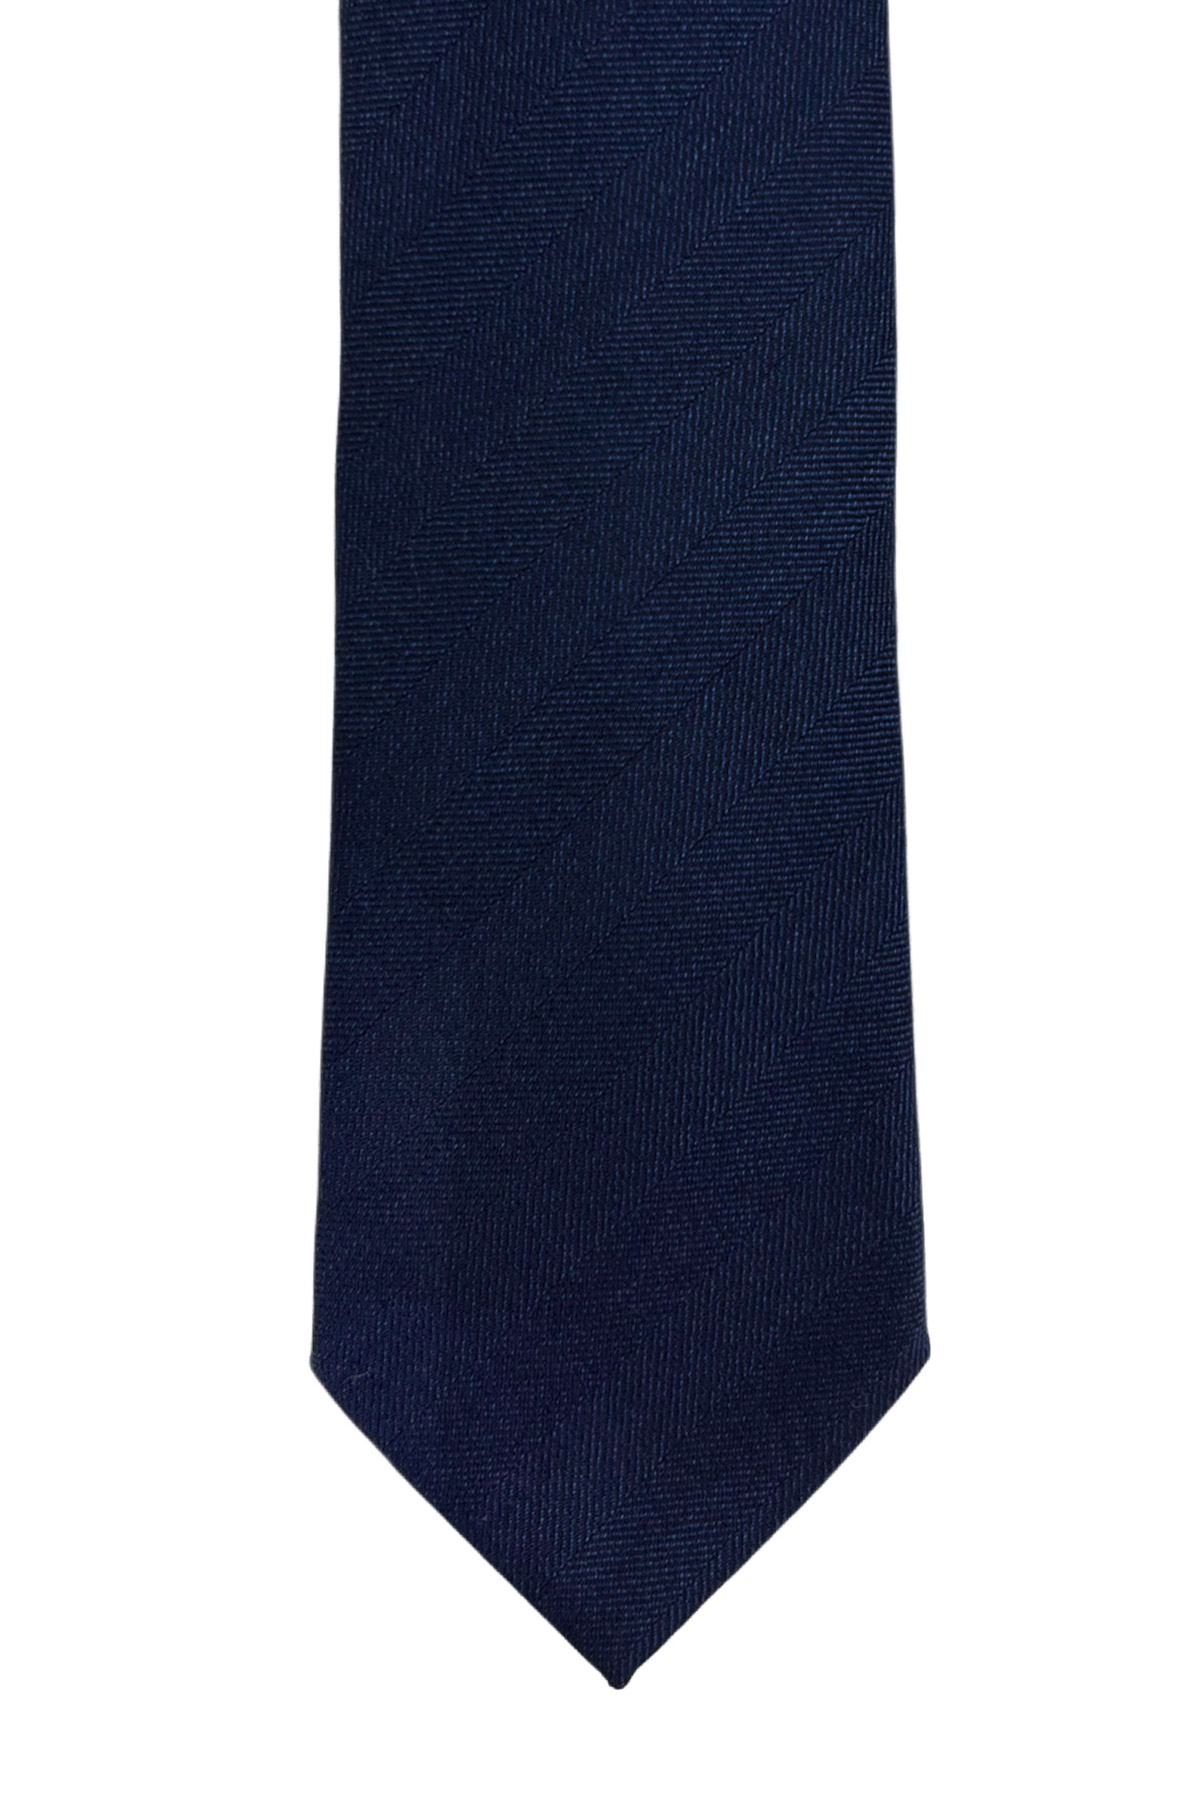 Cravatta uomo blu spigata Vitale Barberis Canonico in fresco lana 100%